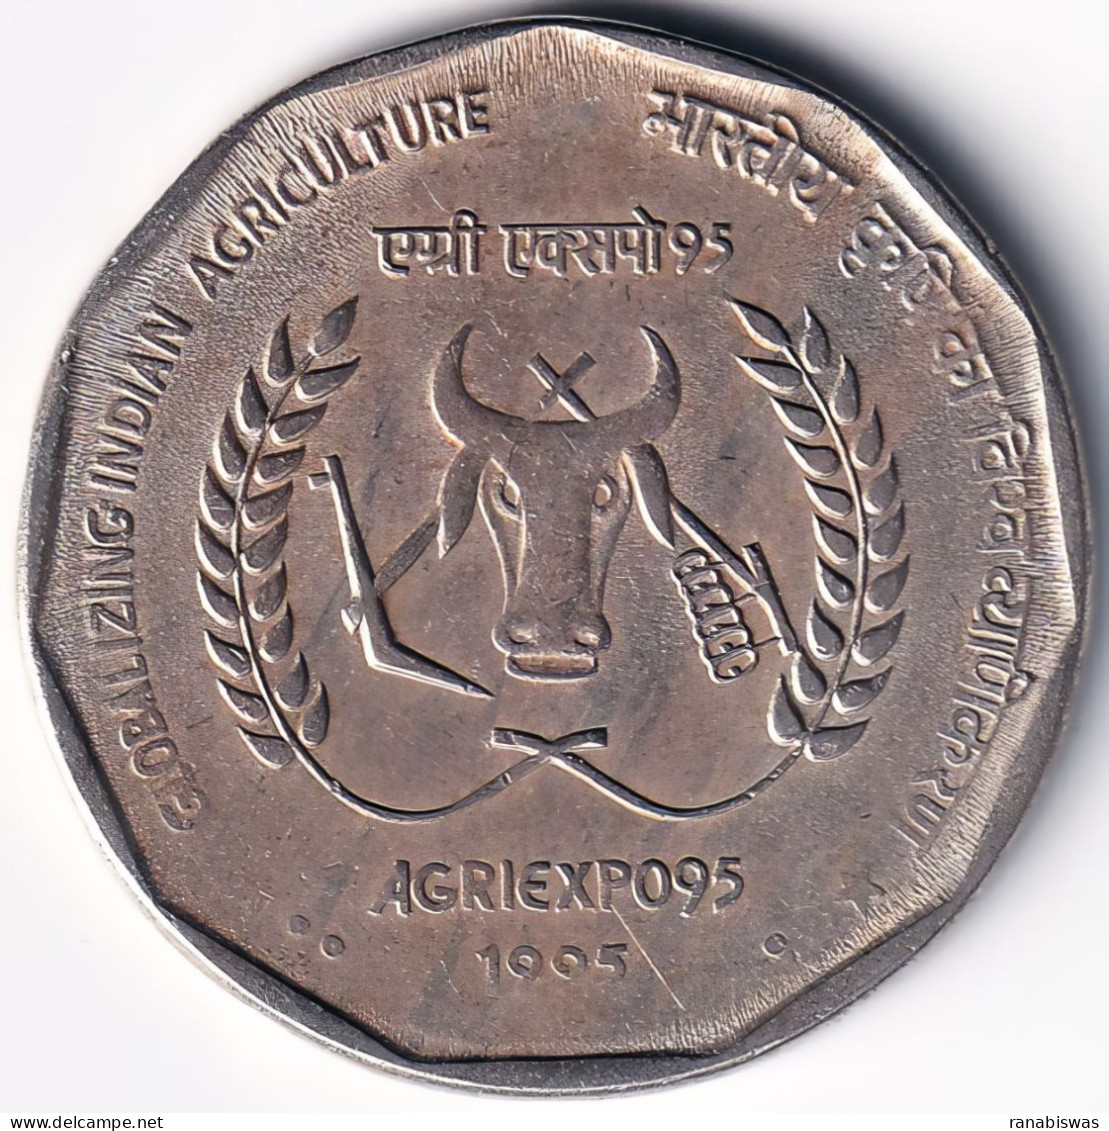 INDIA COIN LOT 125, 2 RUPEES 1995, AGRI EXPO, CALCUTTA MINT, XF, RARE - India